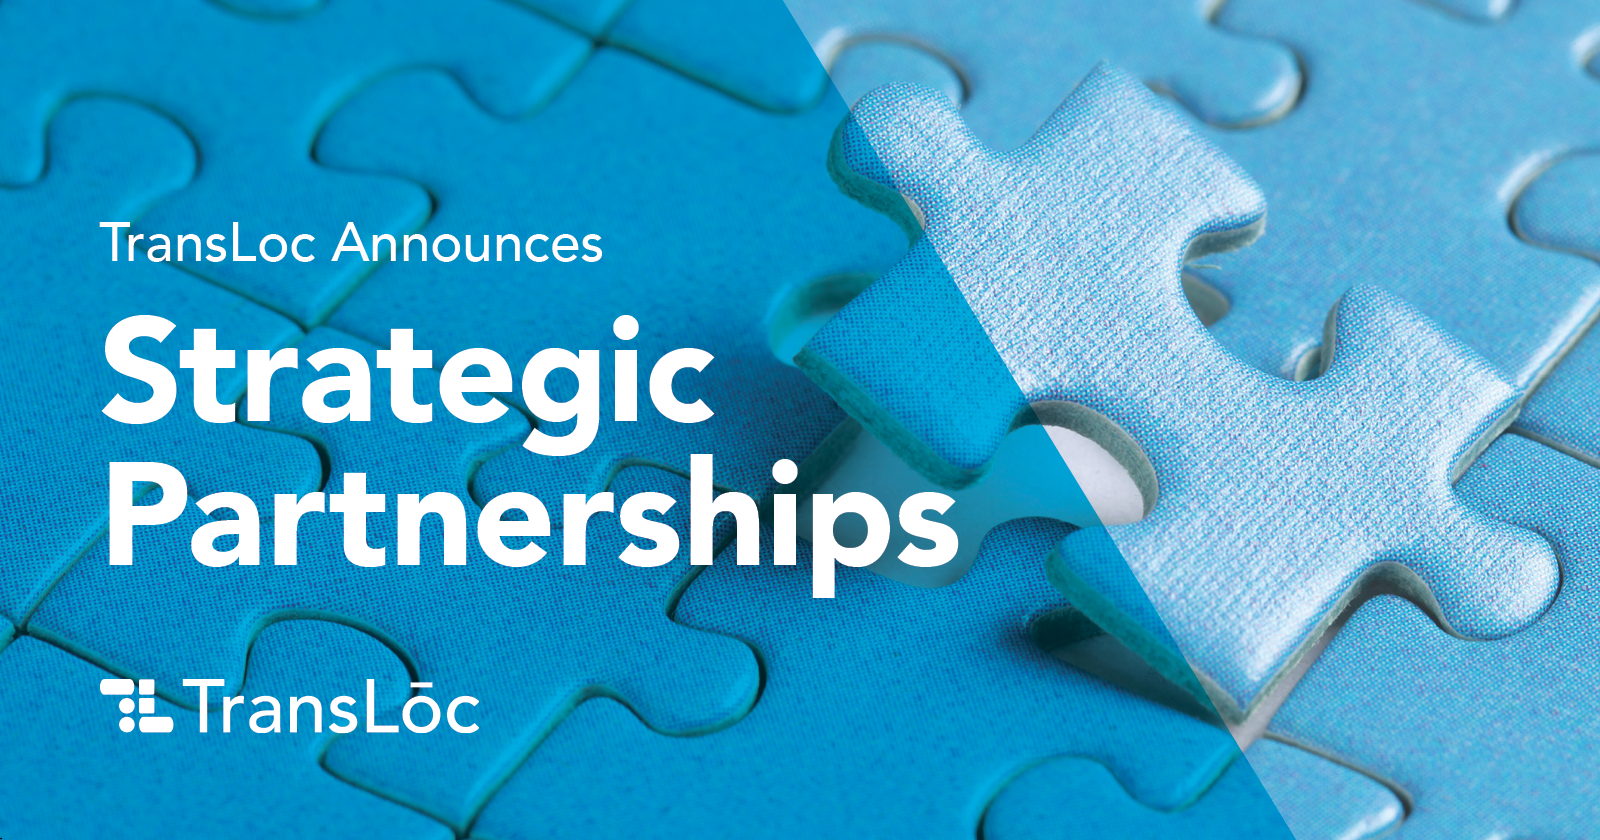 TransLoc announces strategic partnerships